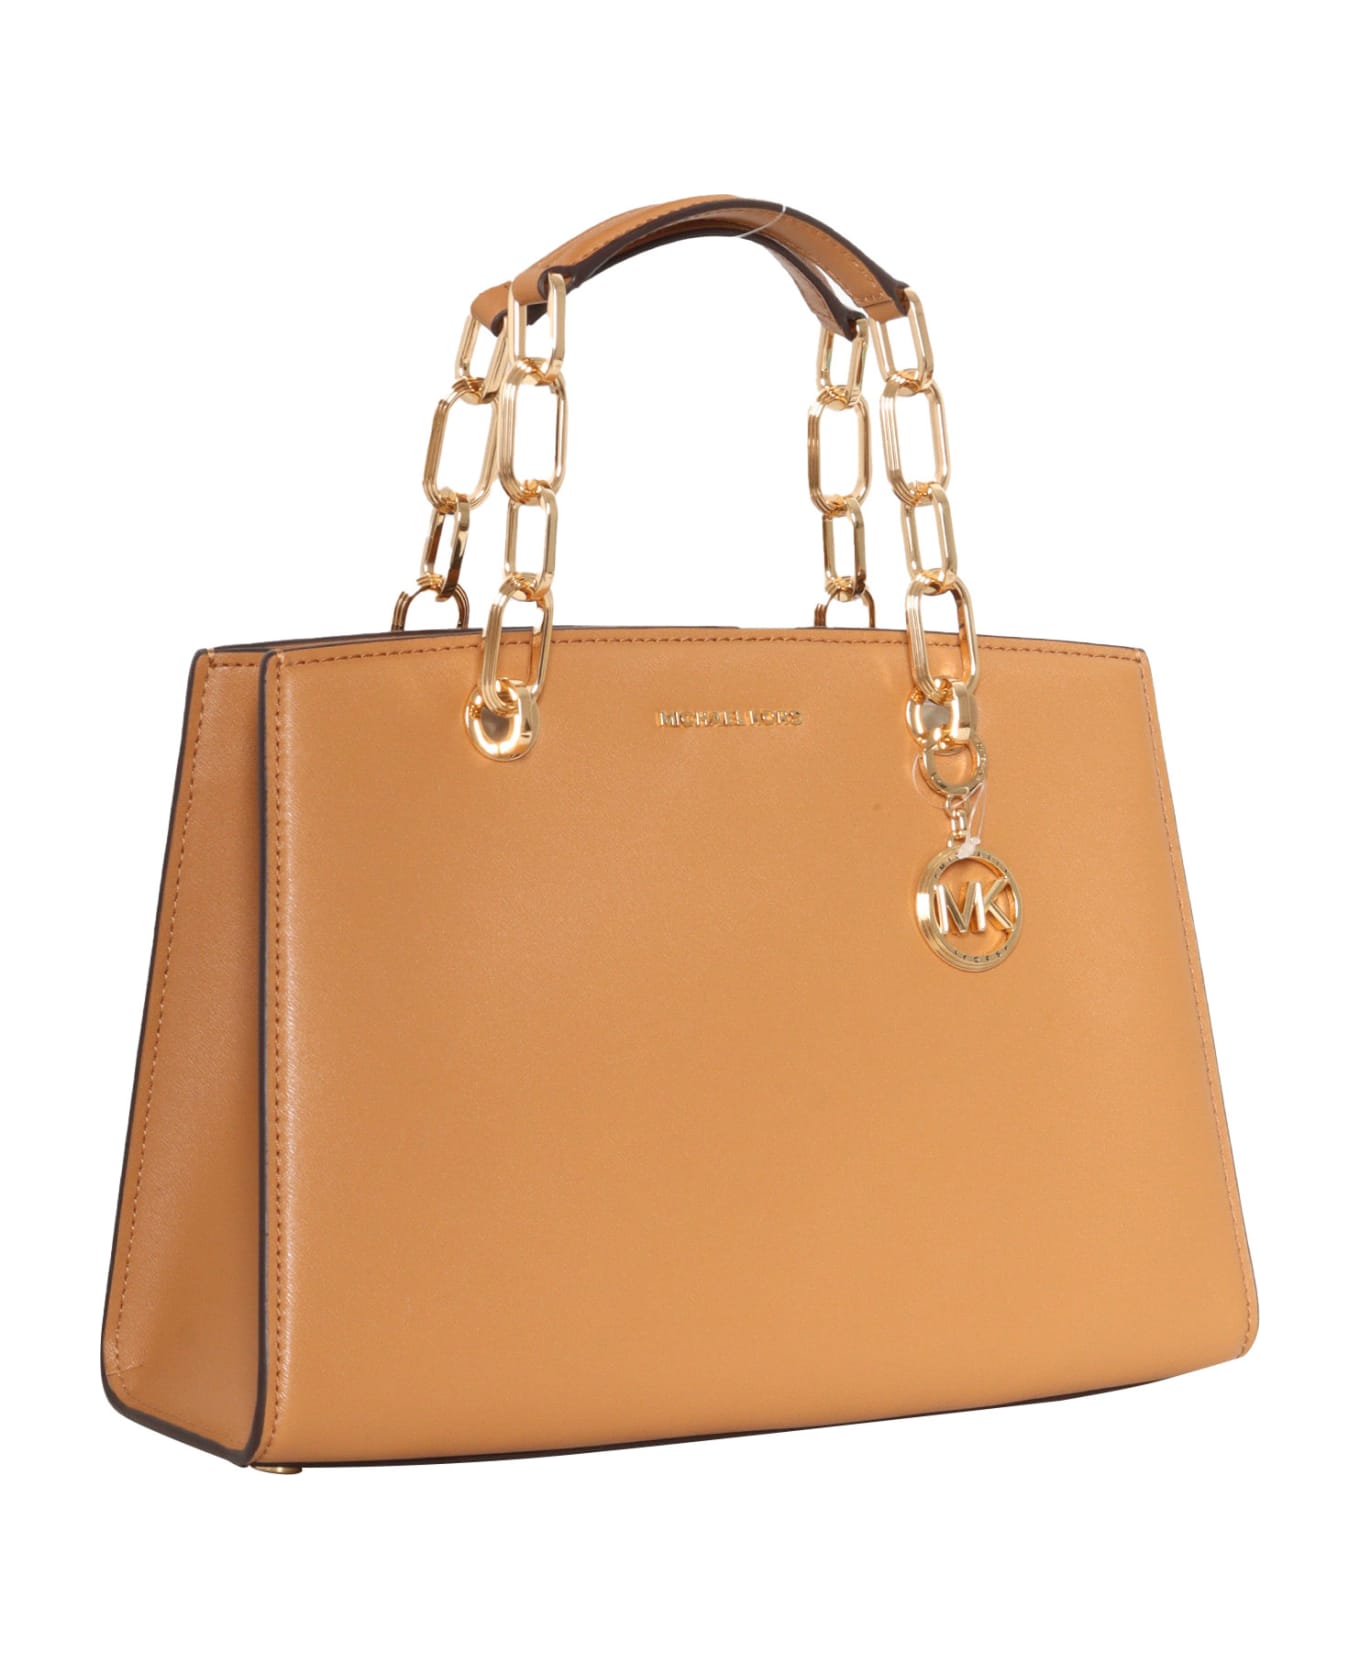 Michael Kors Tan-colored Leather Bag - BEIGE トートバッグ